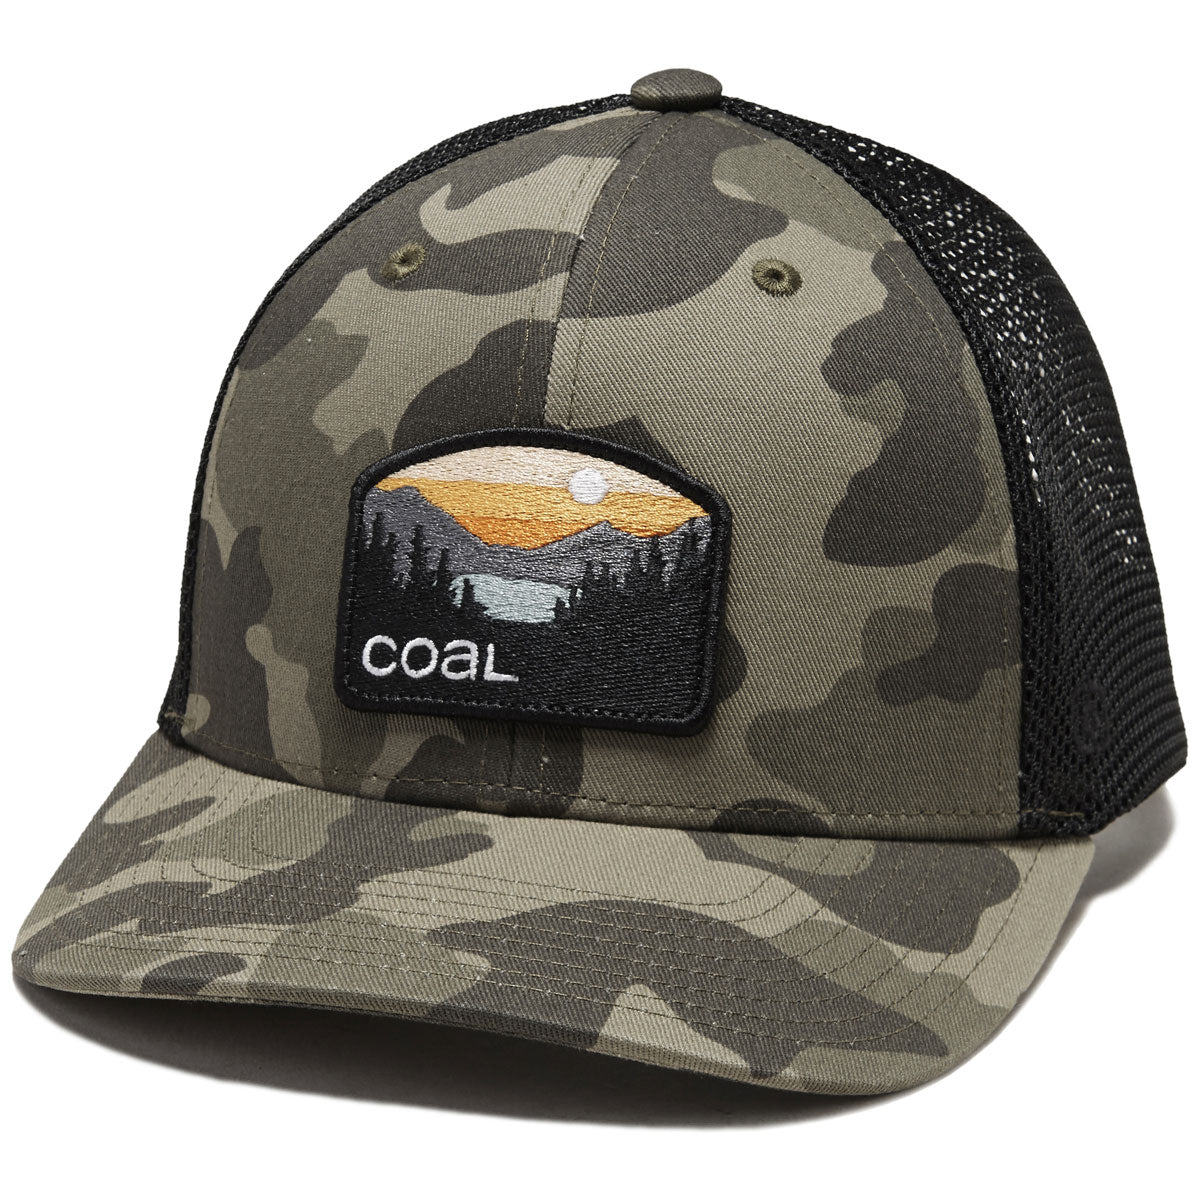 Coal Hauler Low One Hat - Camo image 1